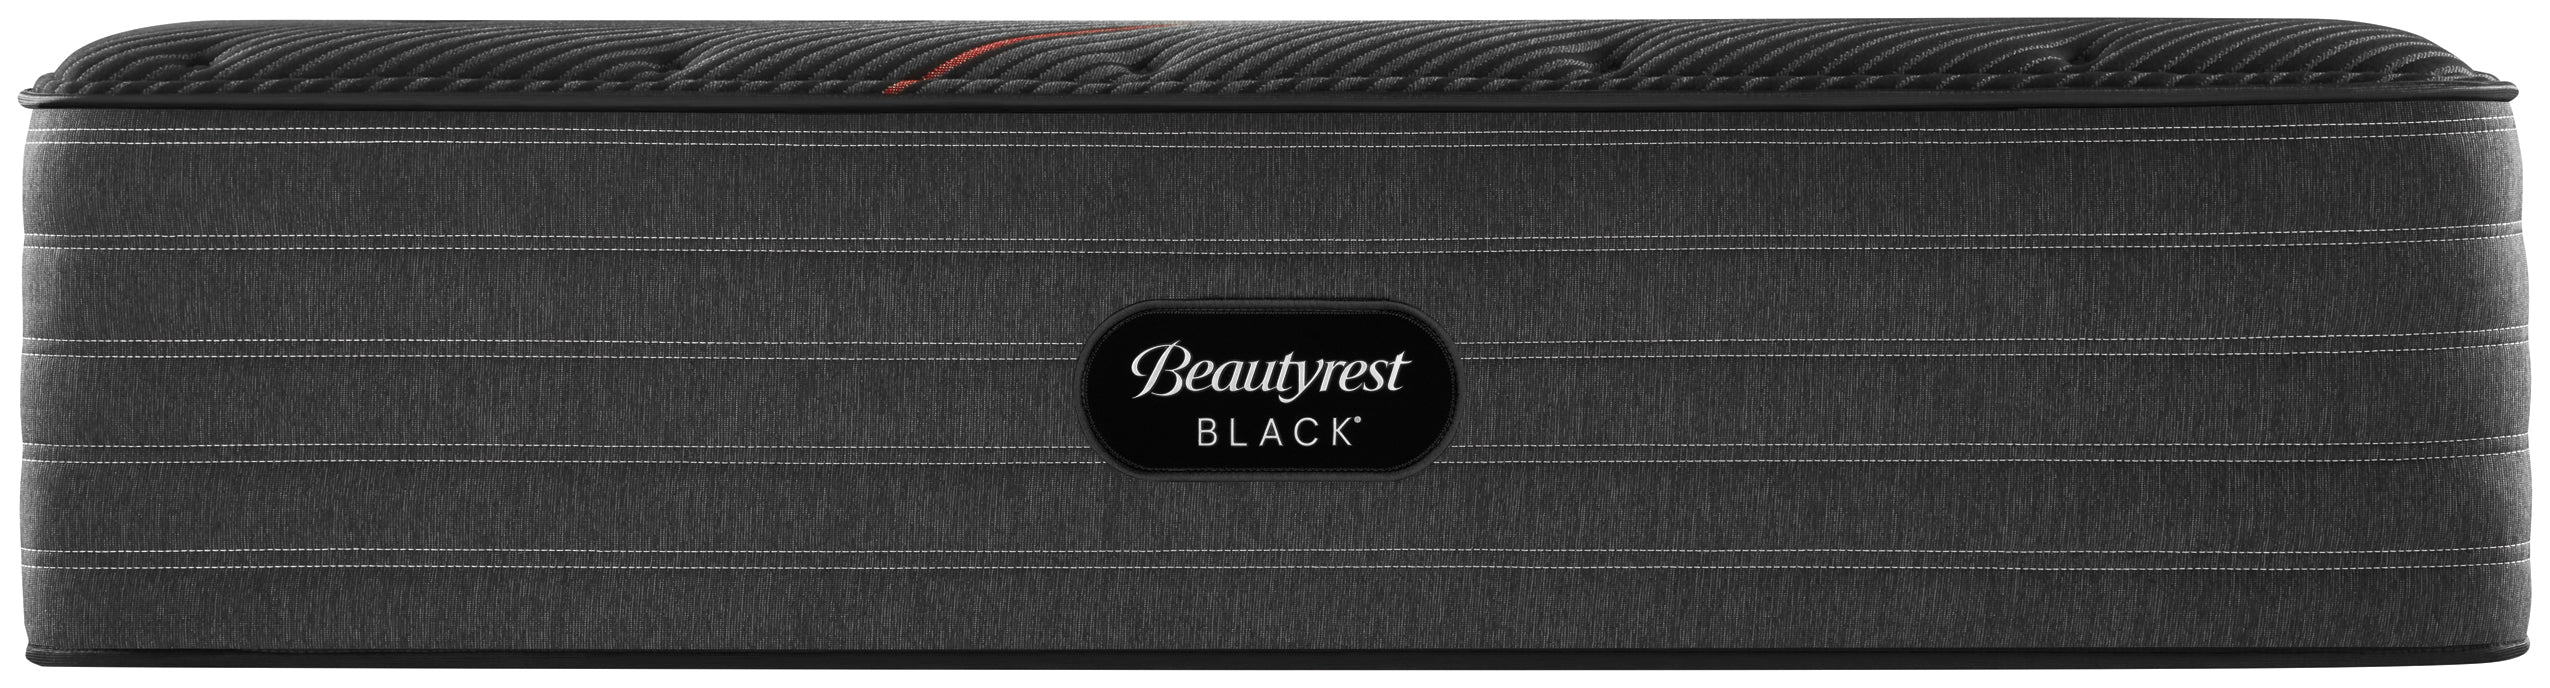 Beautyrest Black C-Class Plush